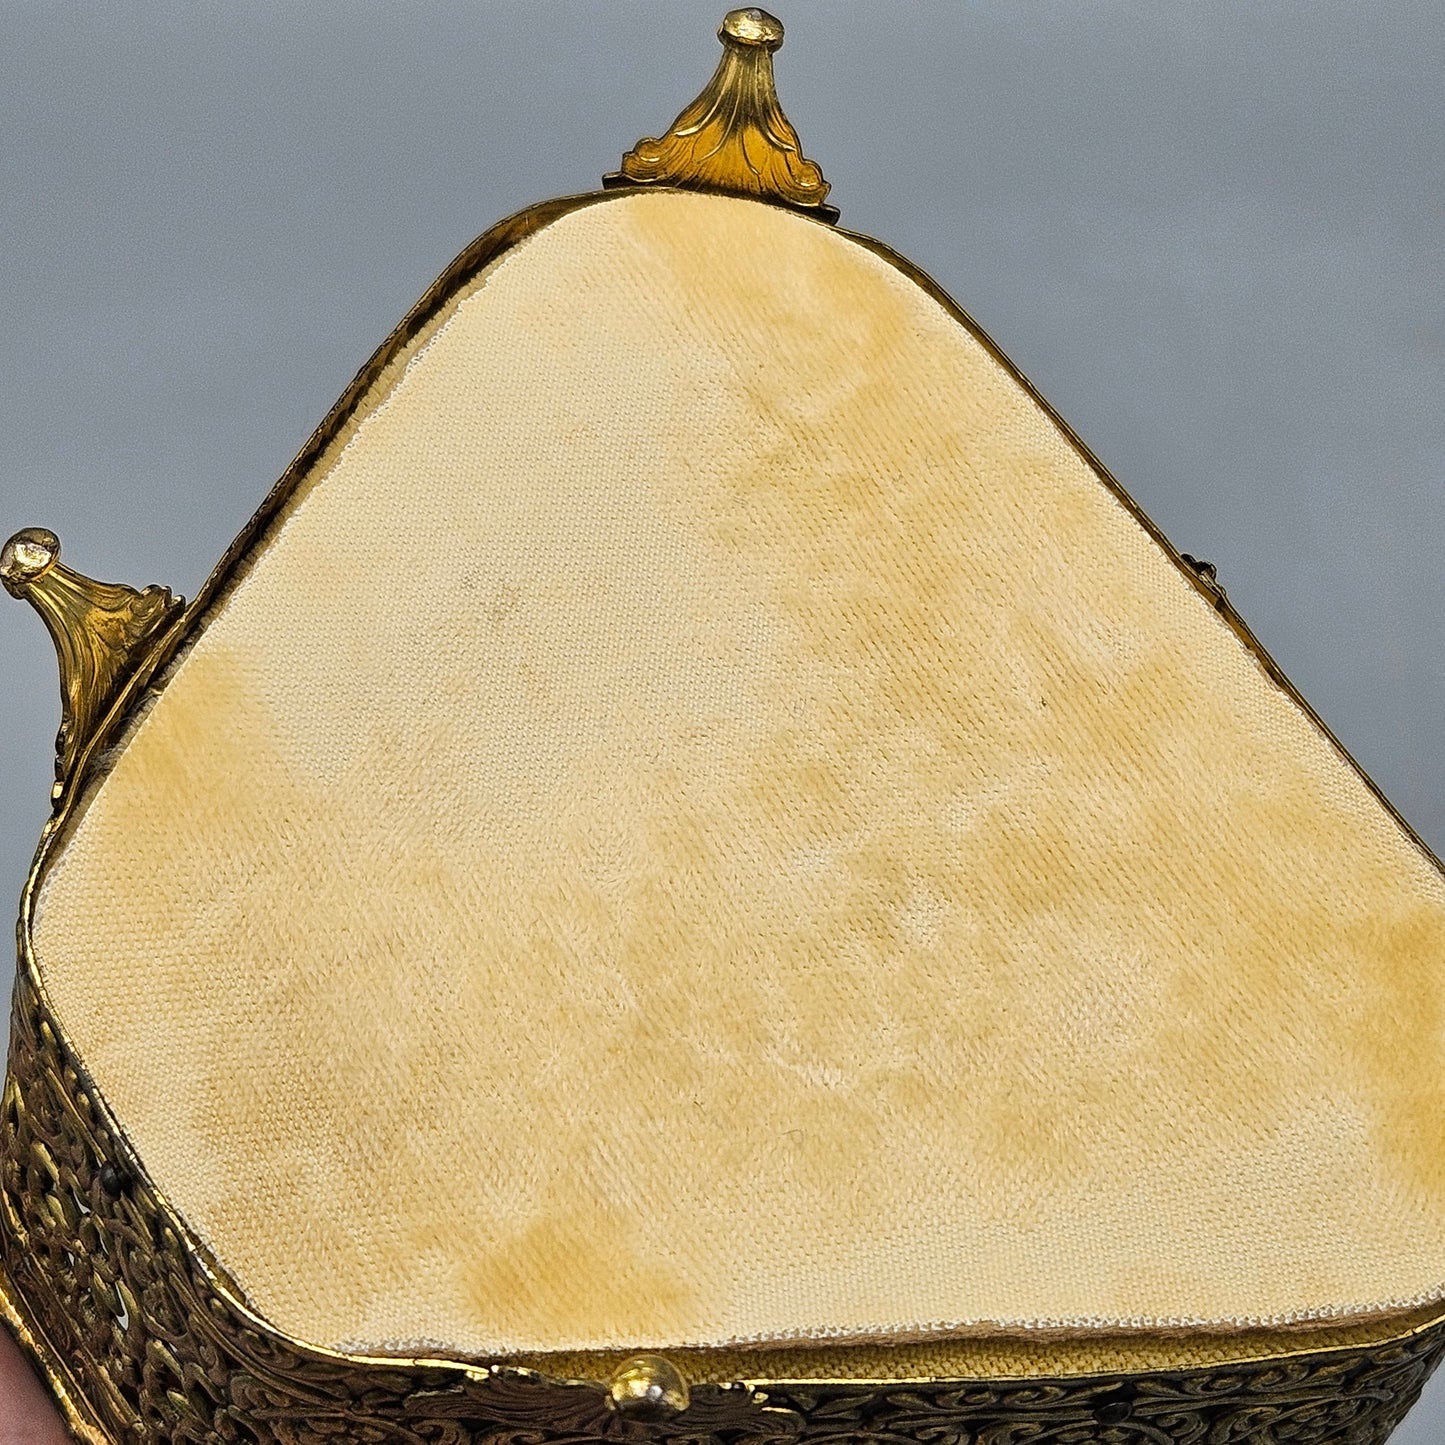 Antique Ormolu Filigree Triangle Jewelry Box